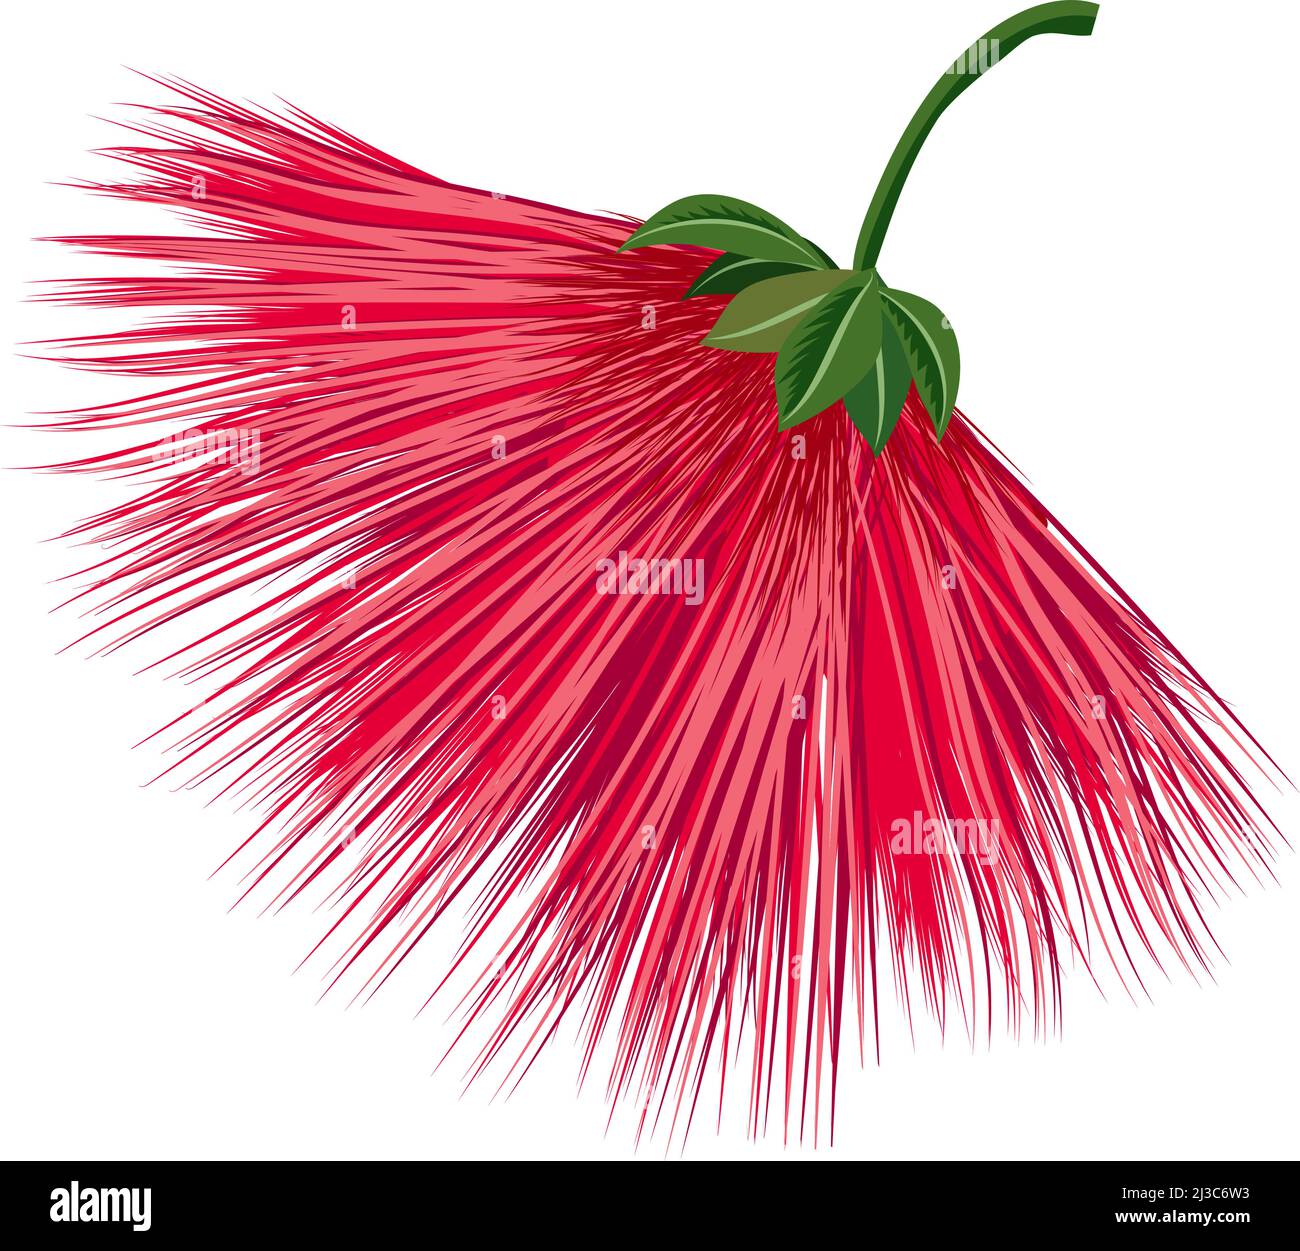 Rote Feuerwerksblume. Exotische calliandra Pflanze blüht Stock Vektor